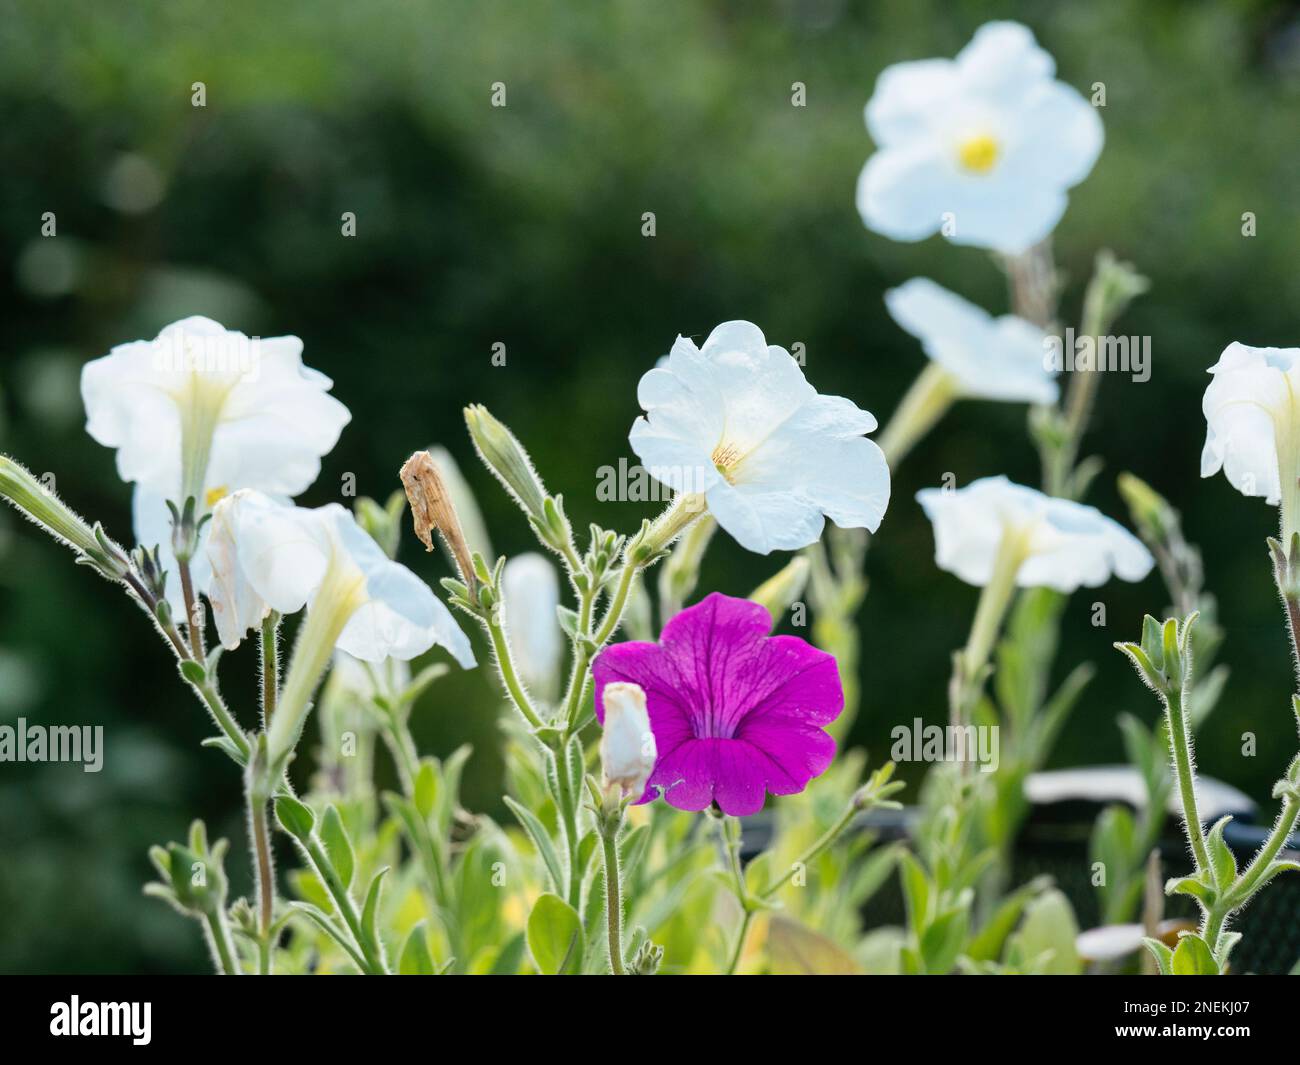 White and purple garden petunias blooming. Stock Photo